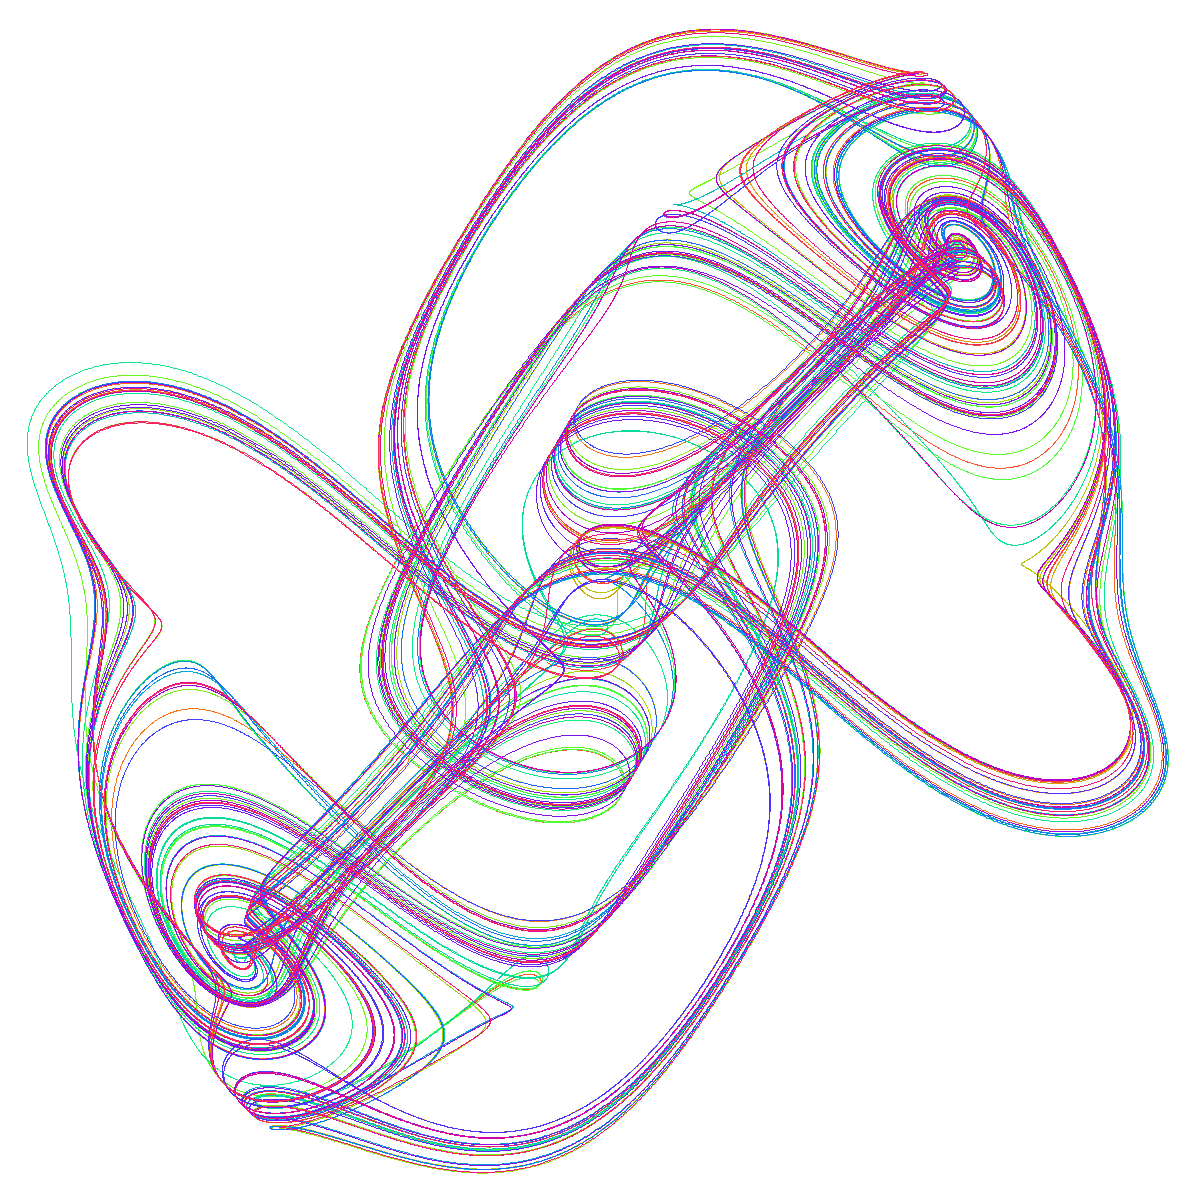 Thomas' Cyclically Symmetric Attractor